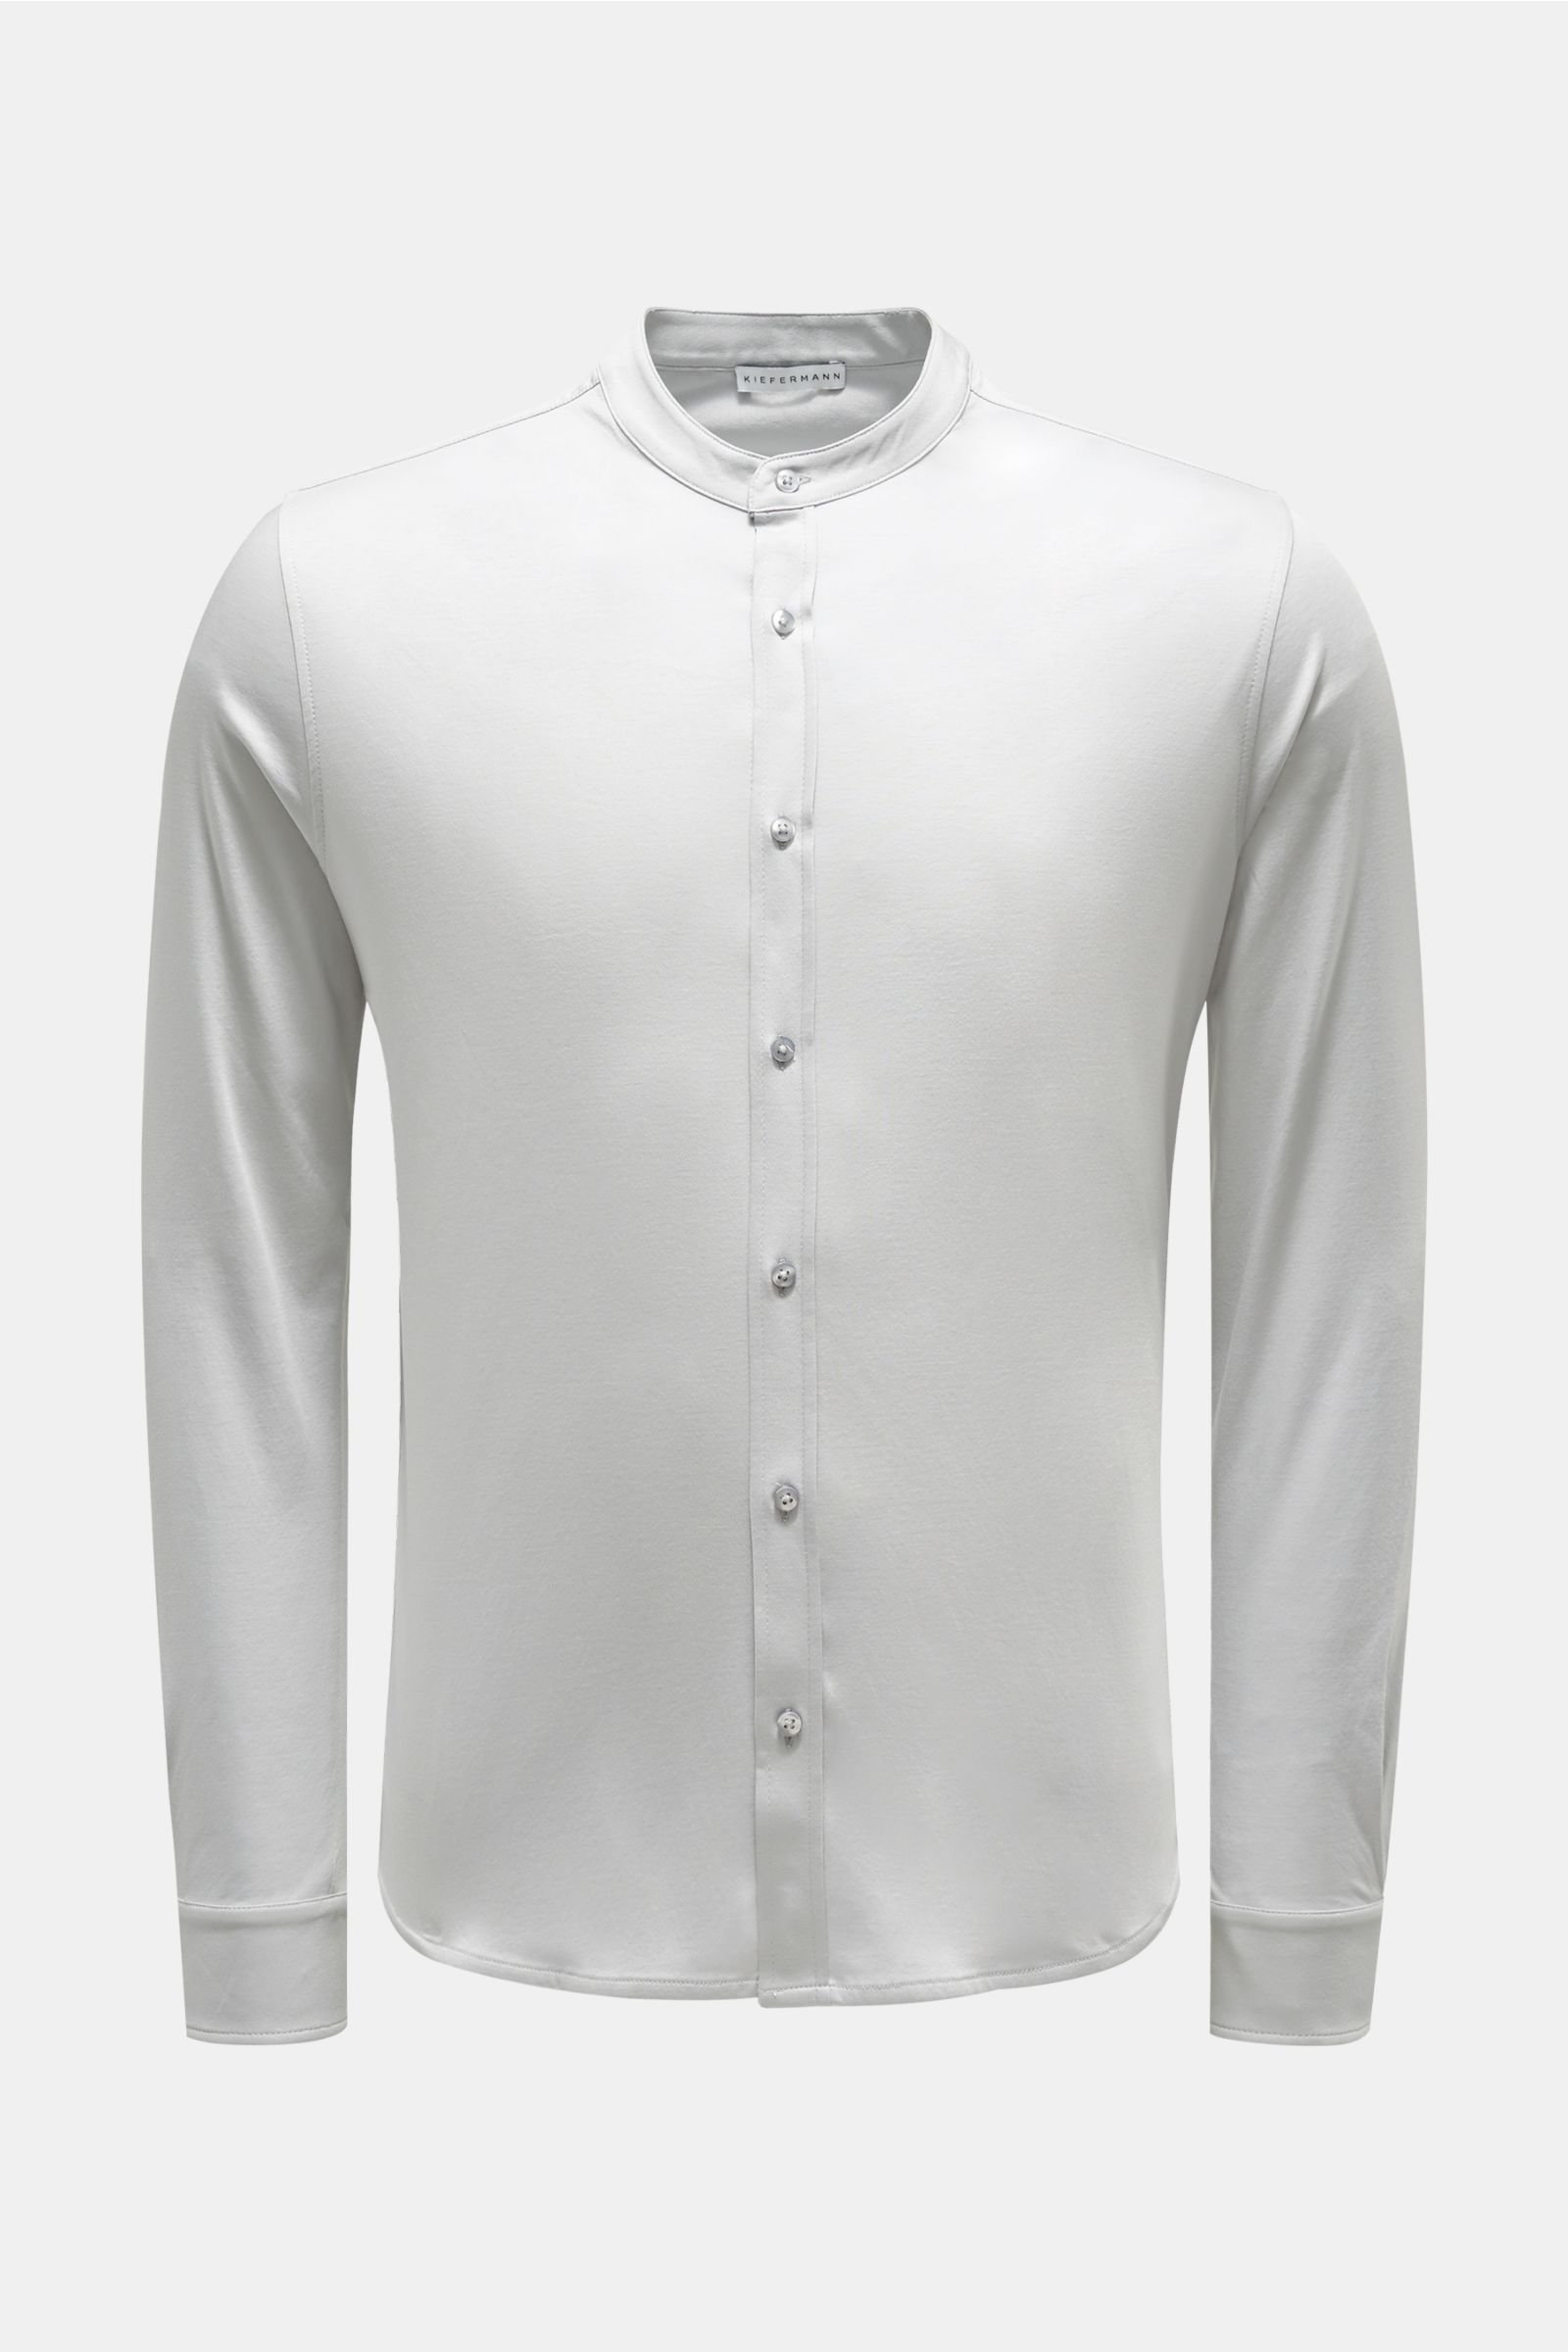 Jersey shirt 'Antonio' grandad collar light grey